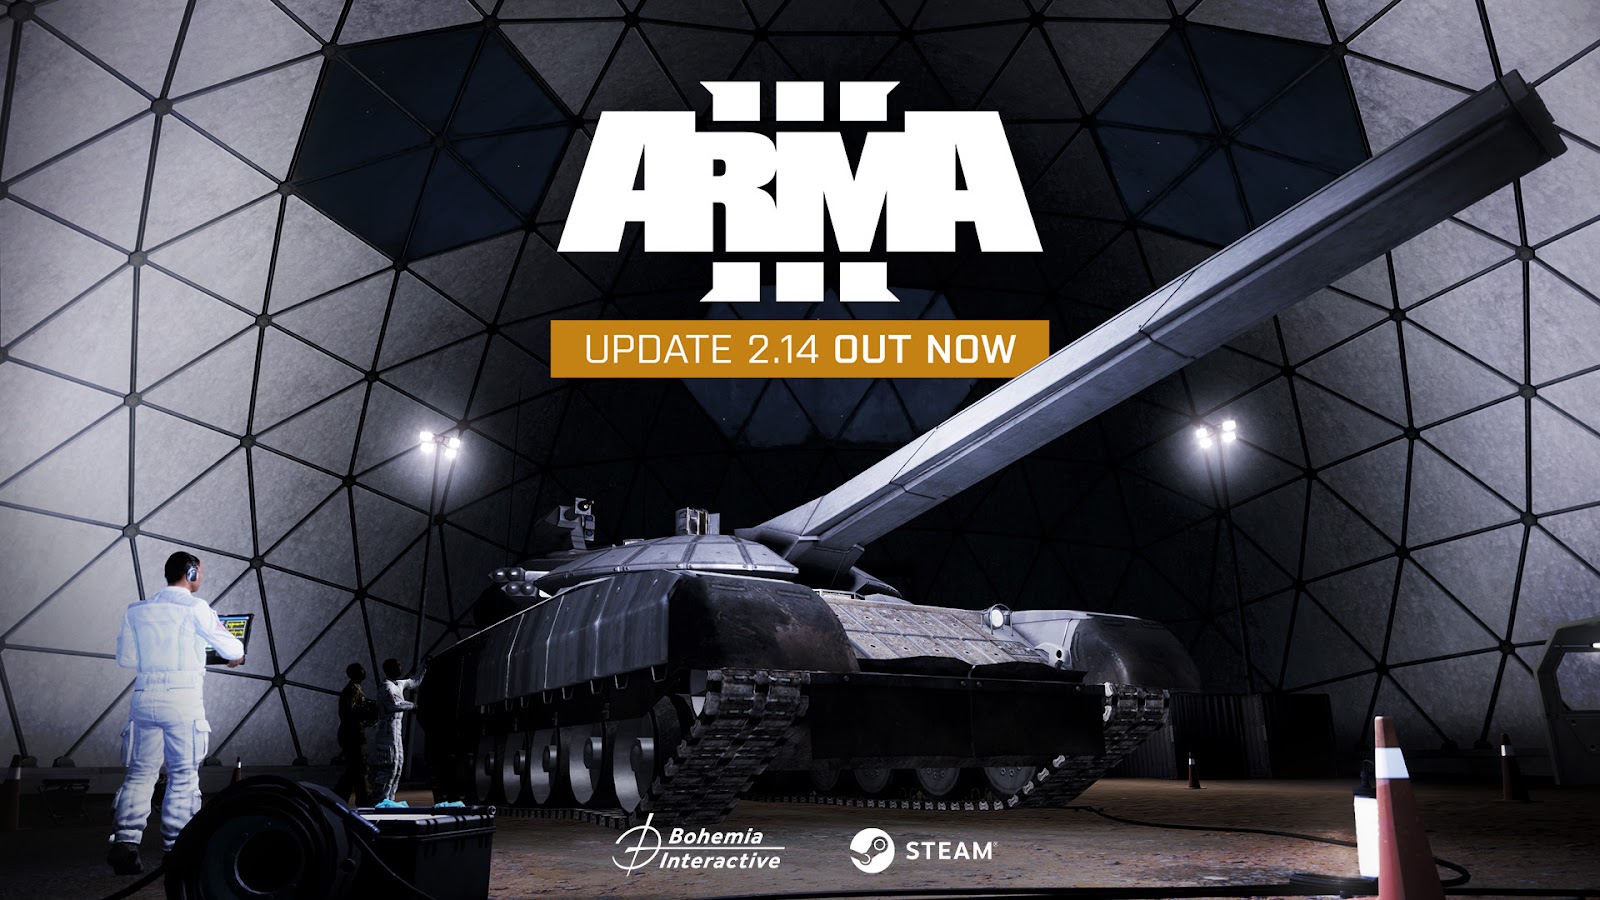 Arma Platform on X: #Arma3 is celebrating 9 splendid years - and